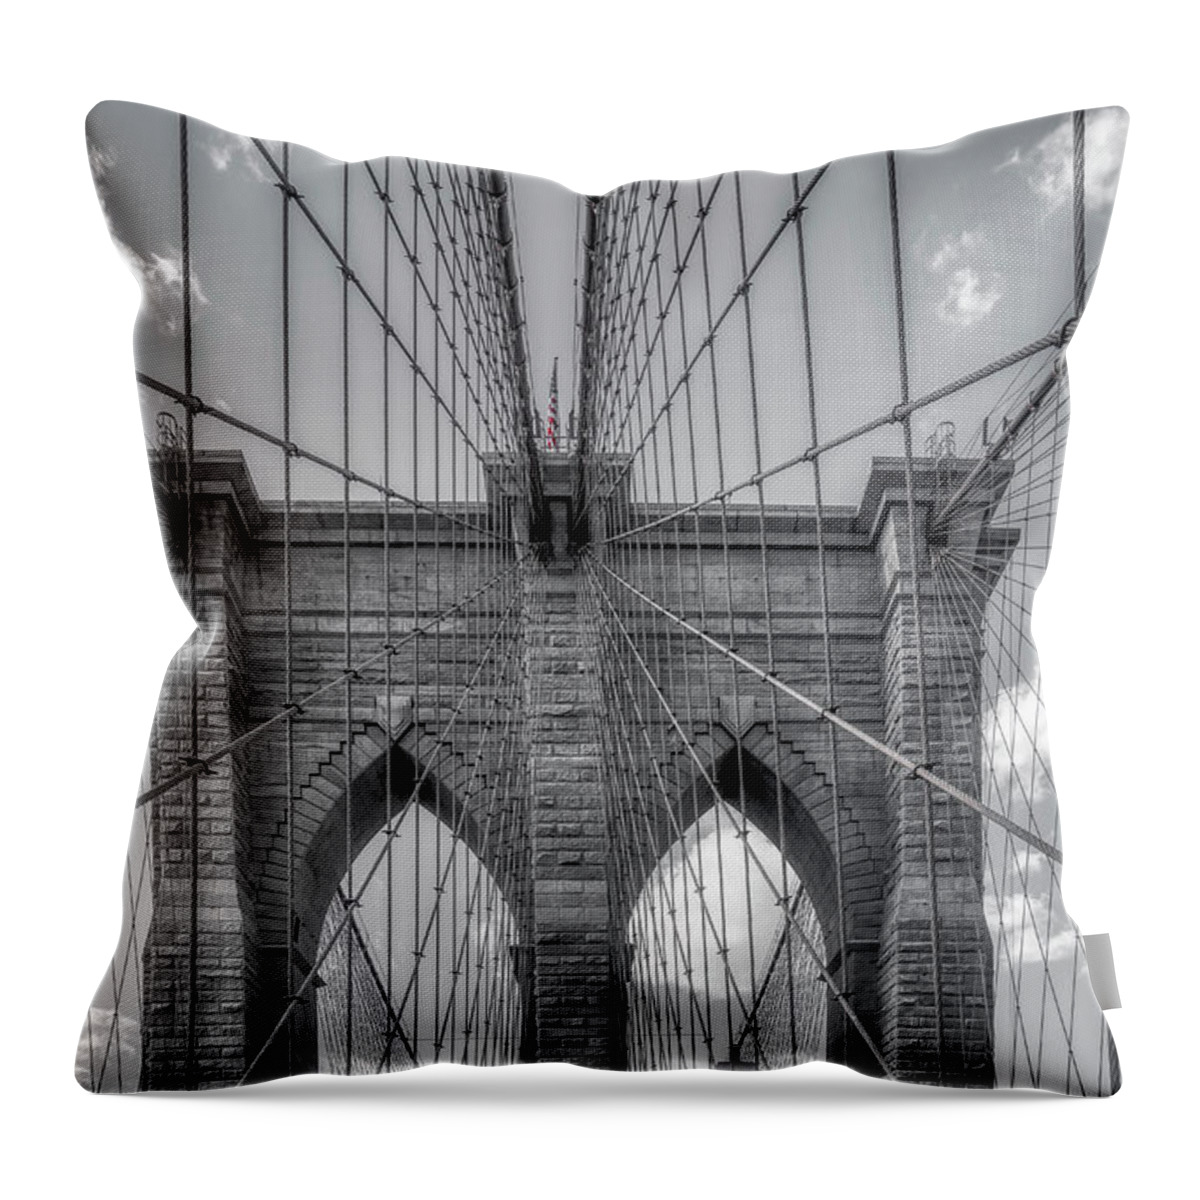 Brooklyn Bridge Throw Pillow featuring the photograph The Brooklyn Bridge by Penny Polakoff